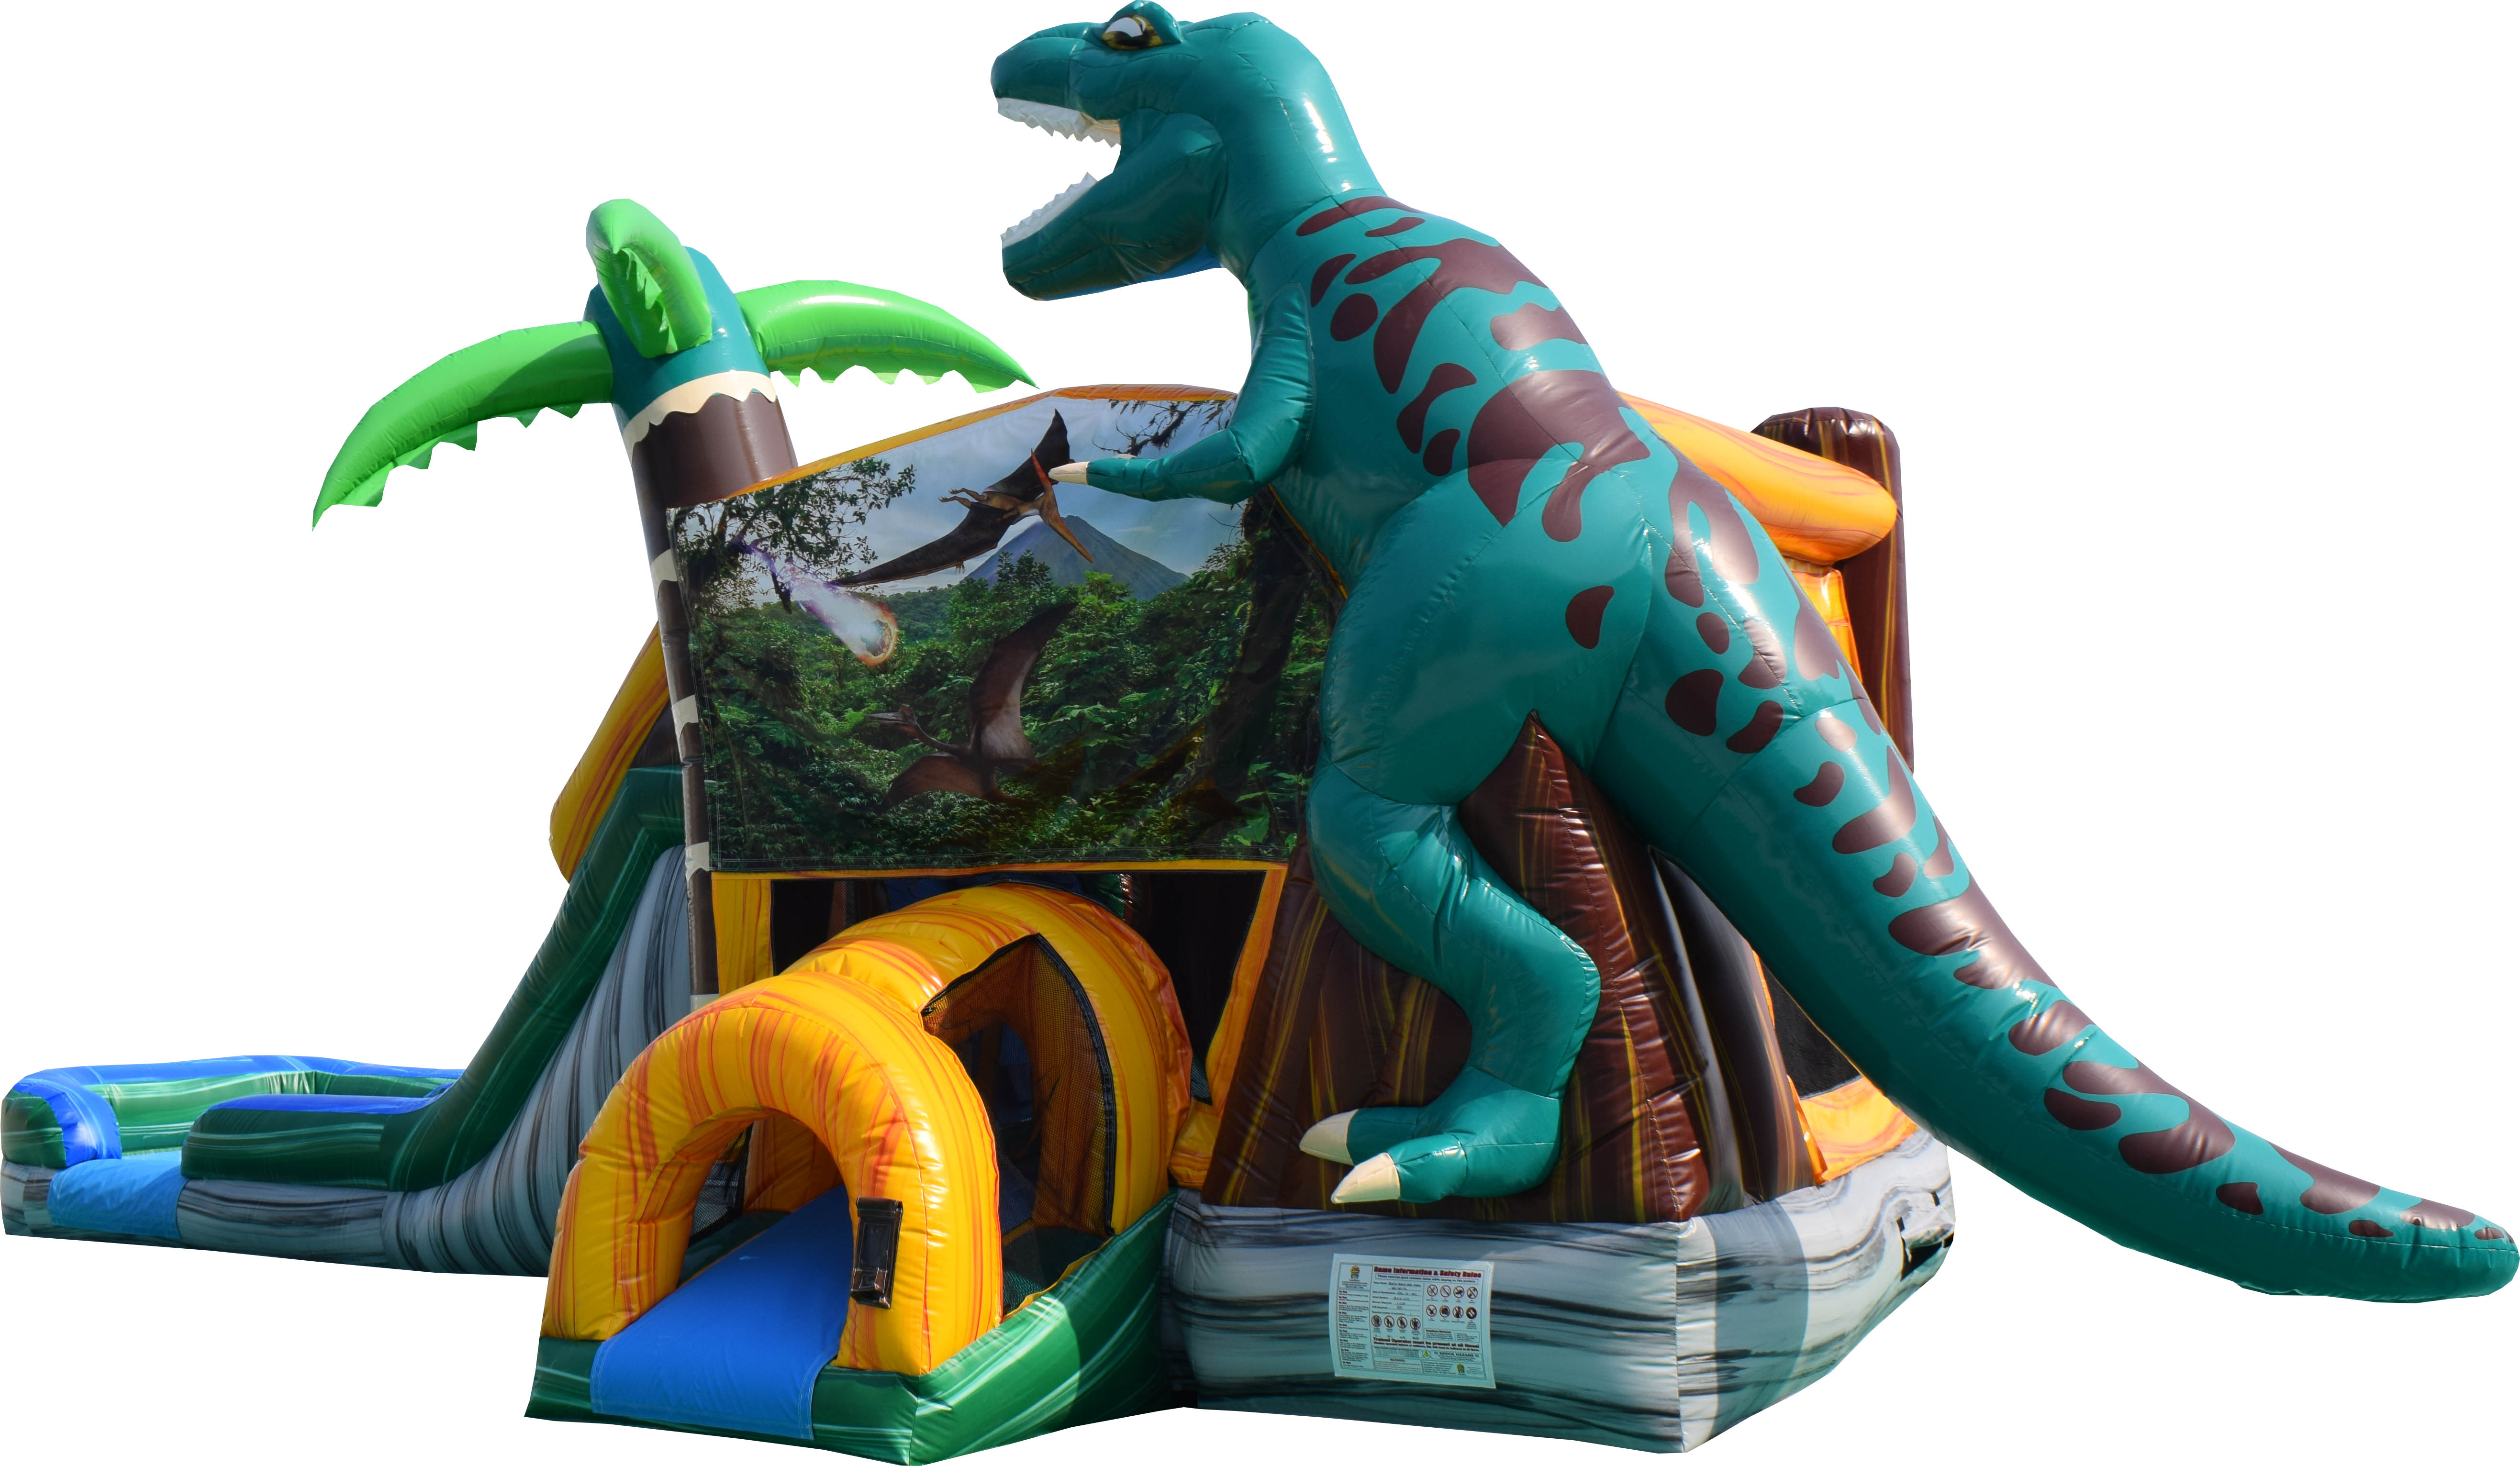 Jurassic Dino water slide rental